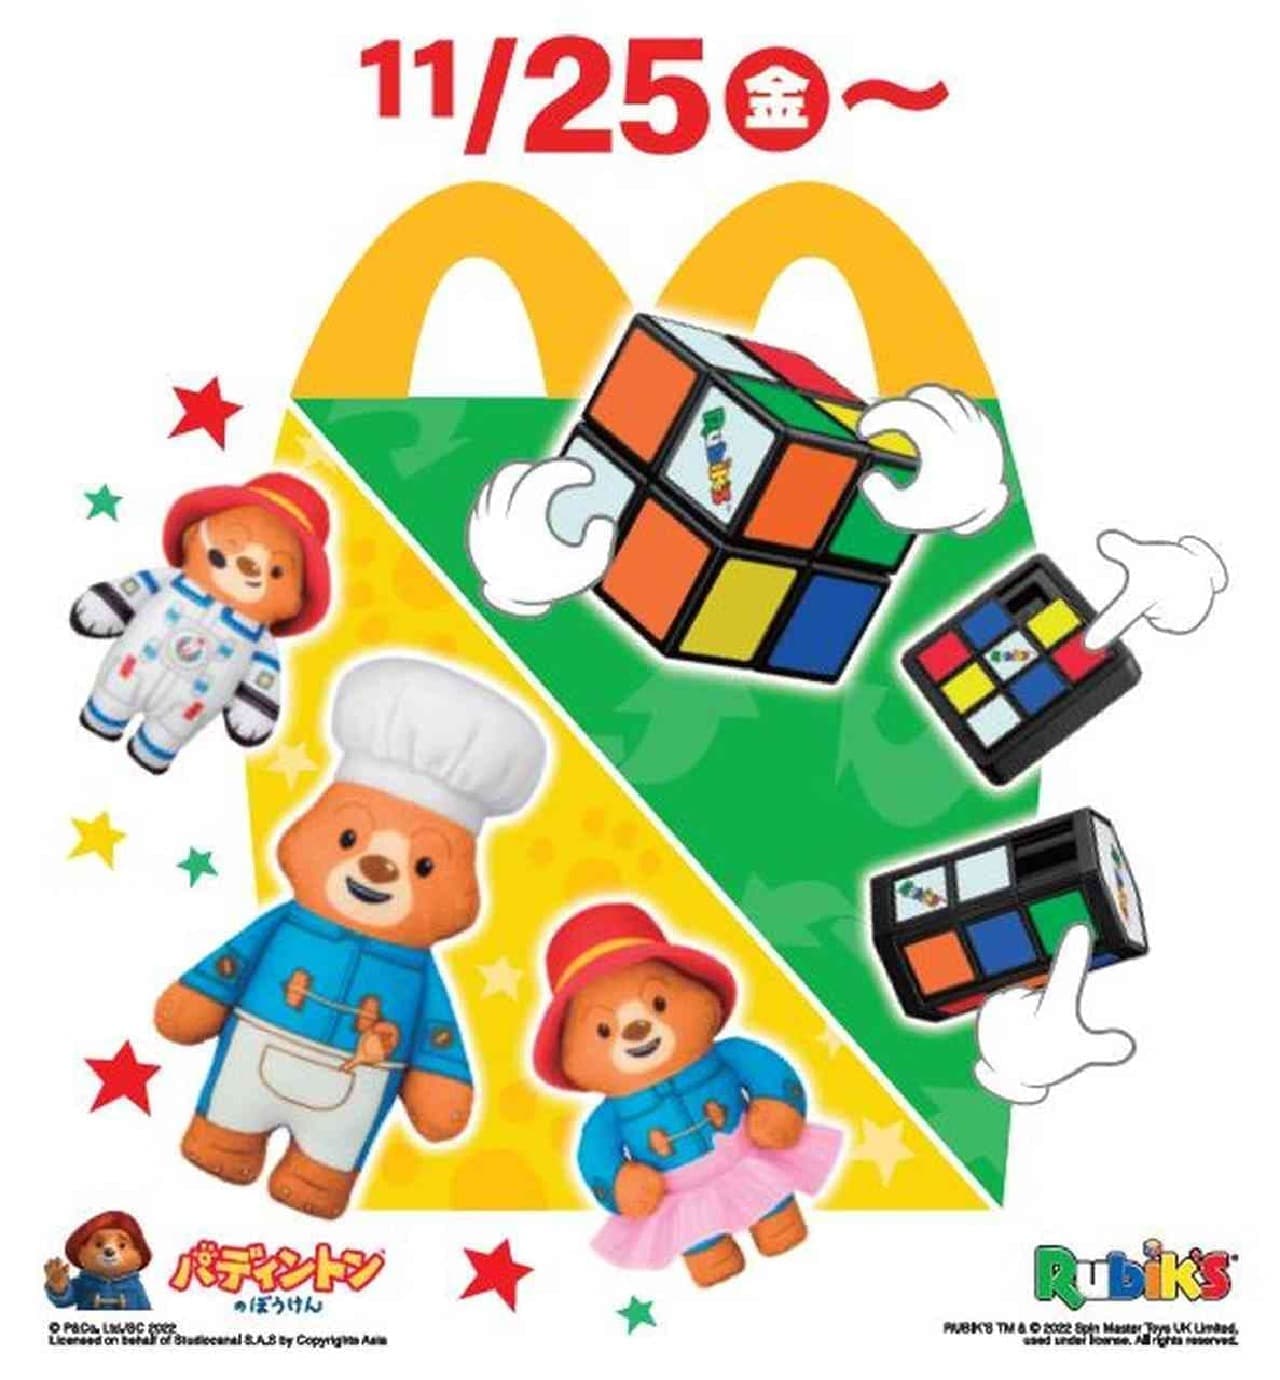 McDonald's Happy Set "Rubik's Cube" and "Paddington